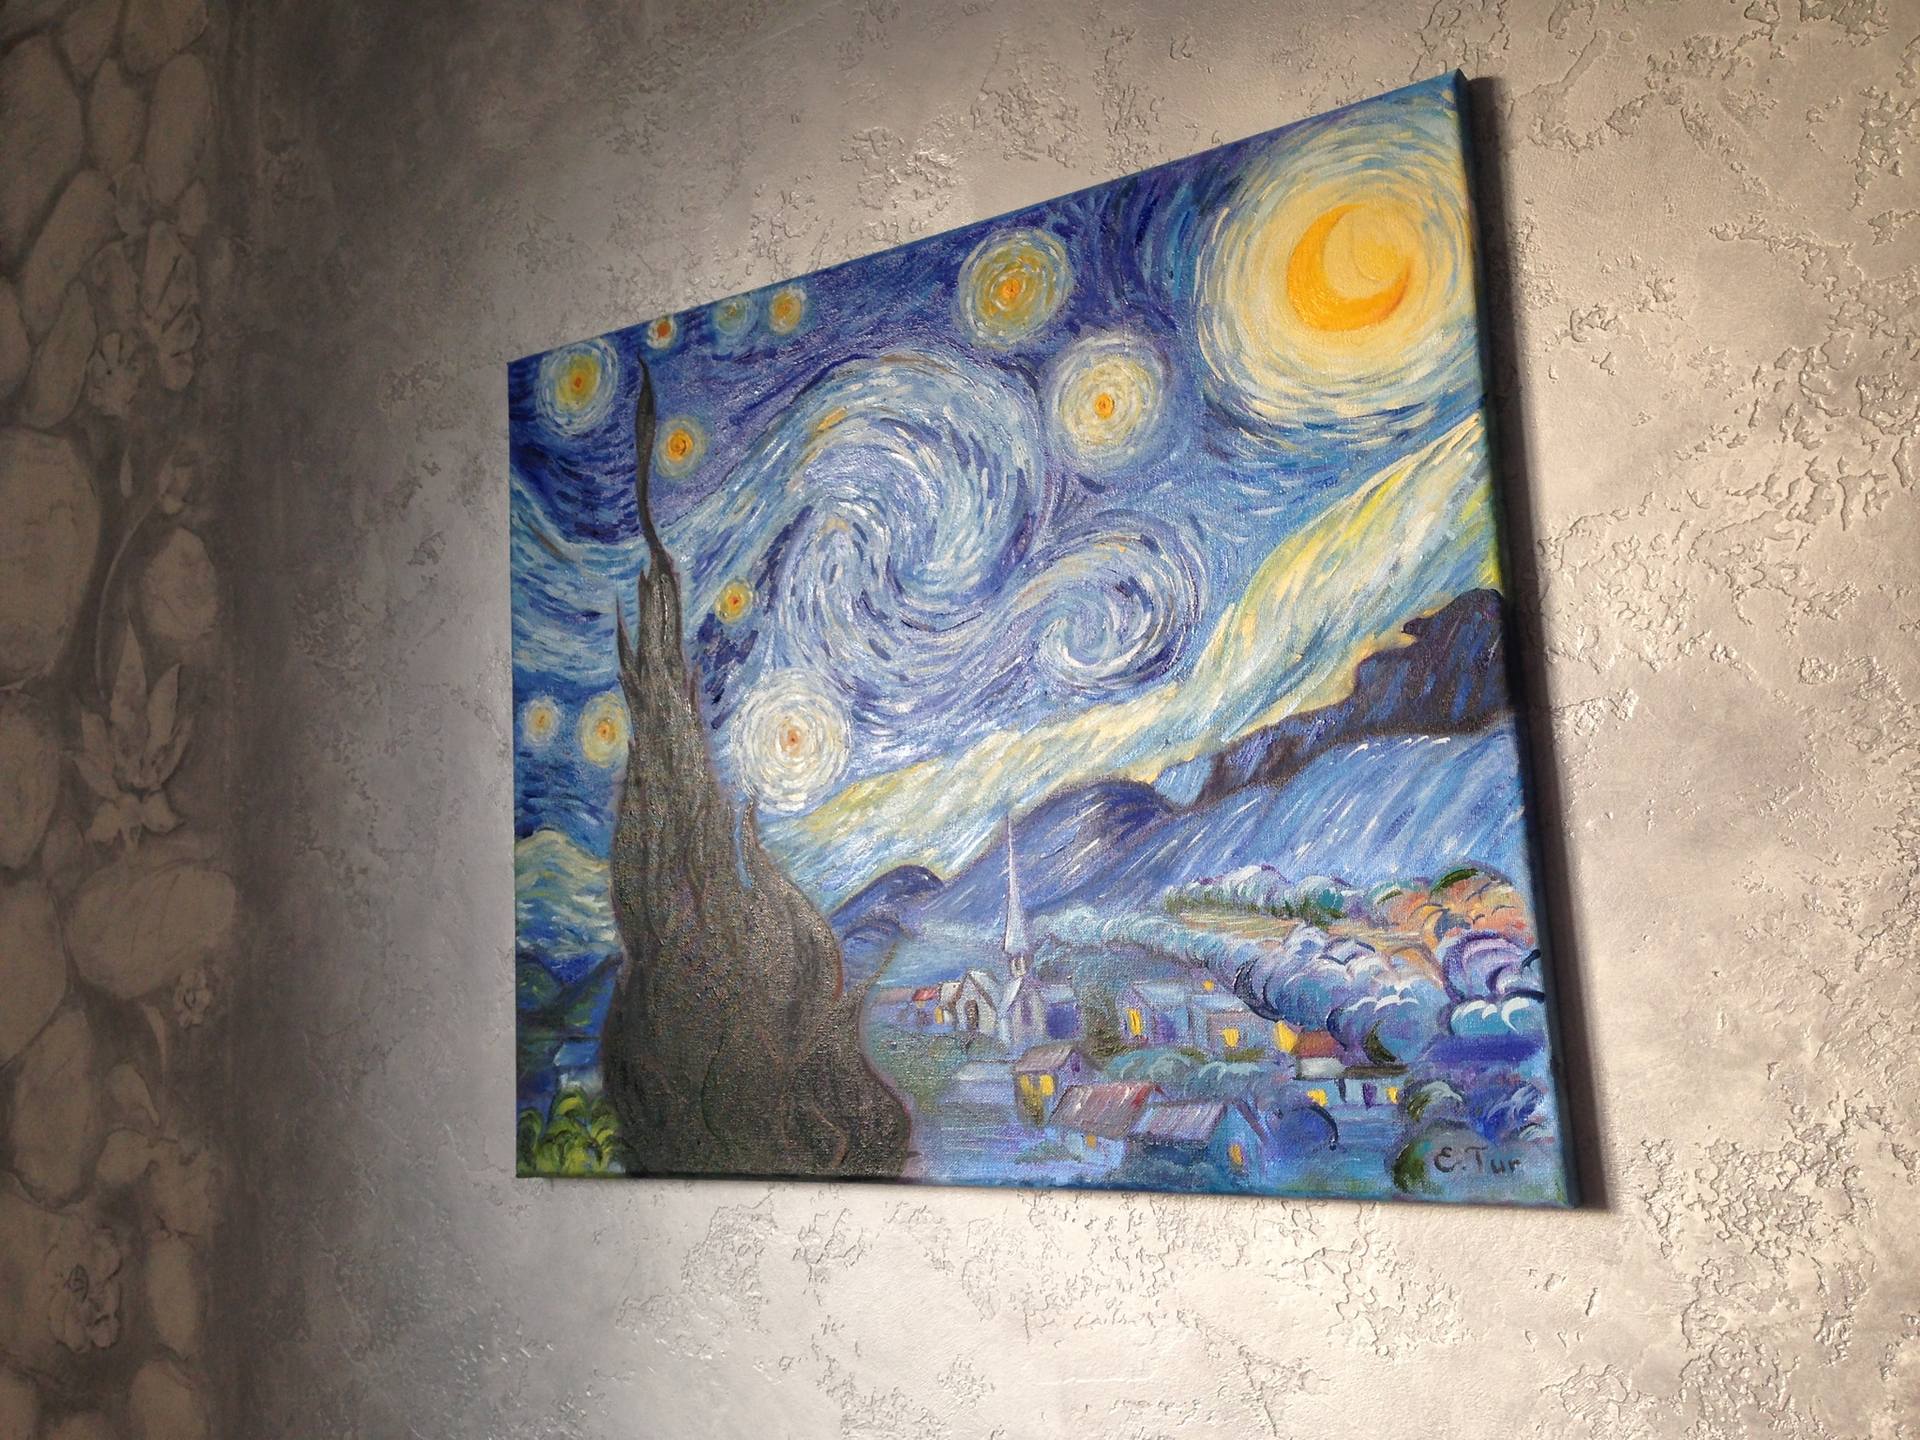 The Starry Night Van Gogh / copy Painting by Edyge Turlybekov 